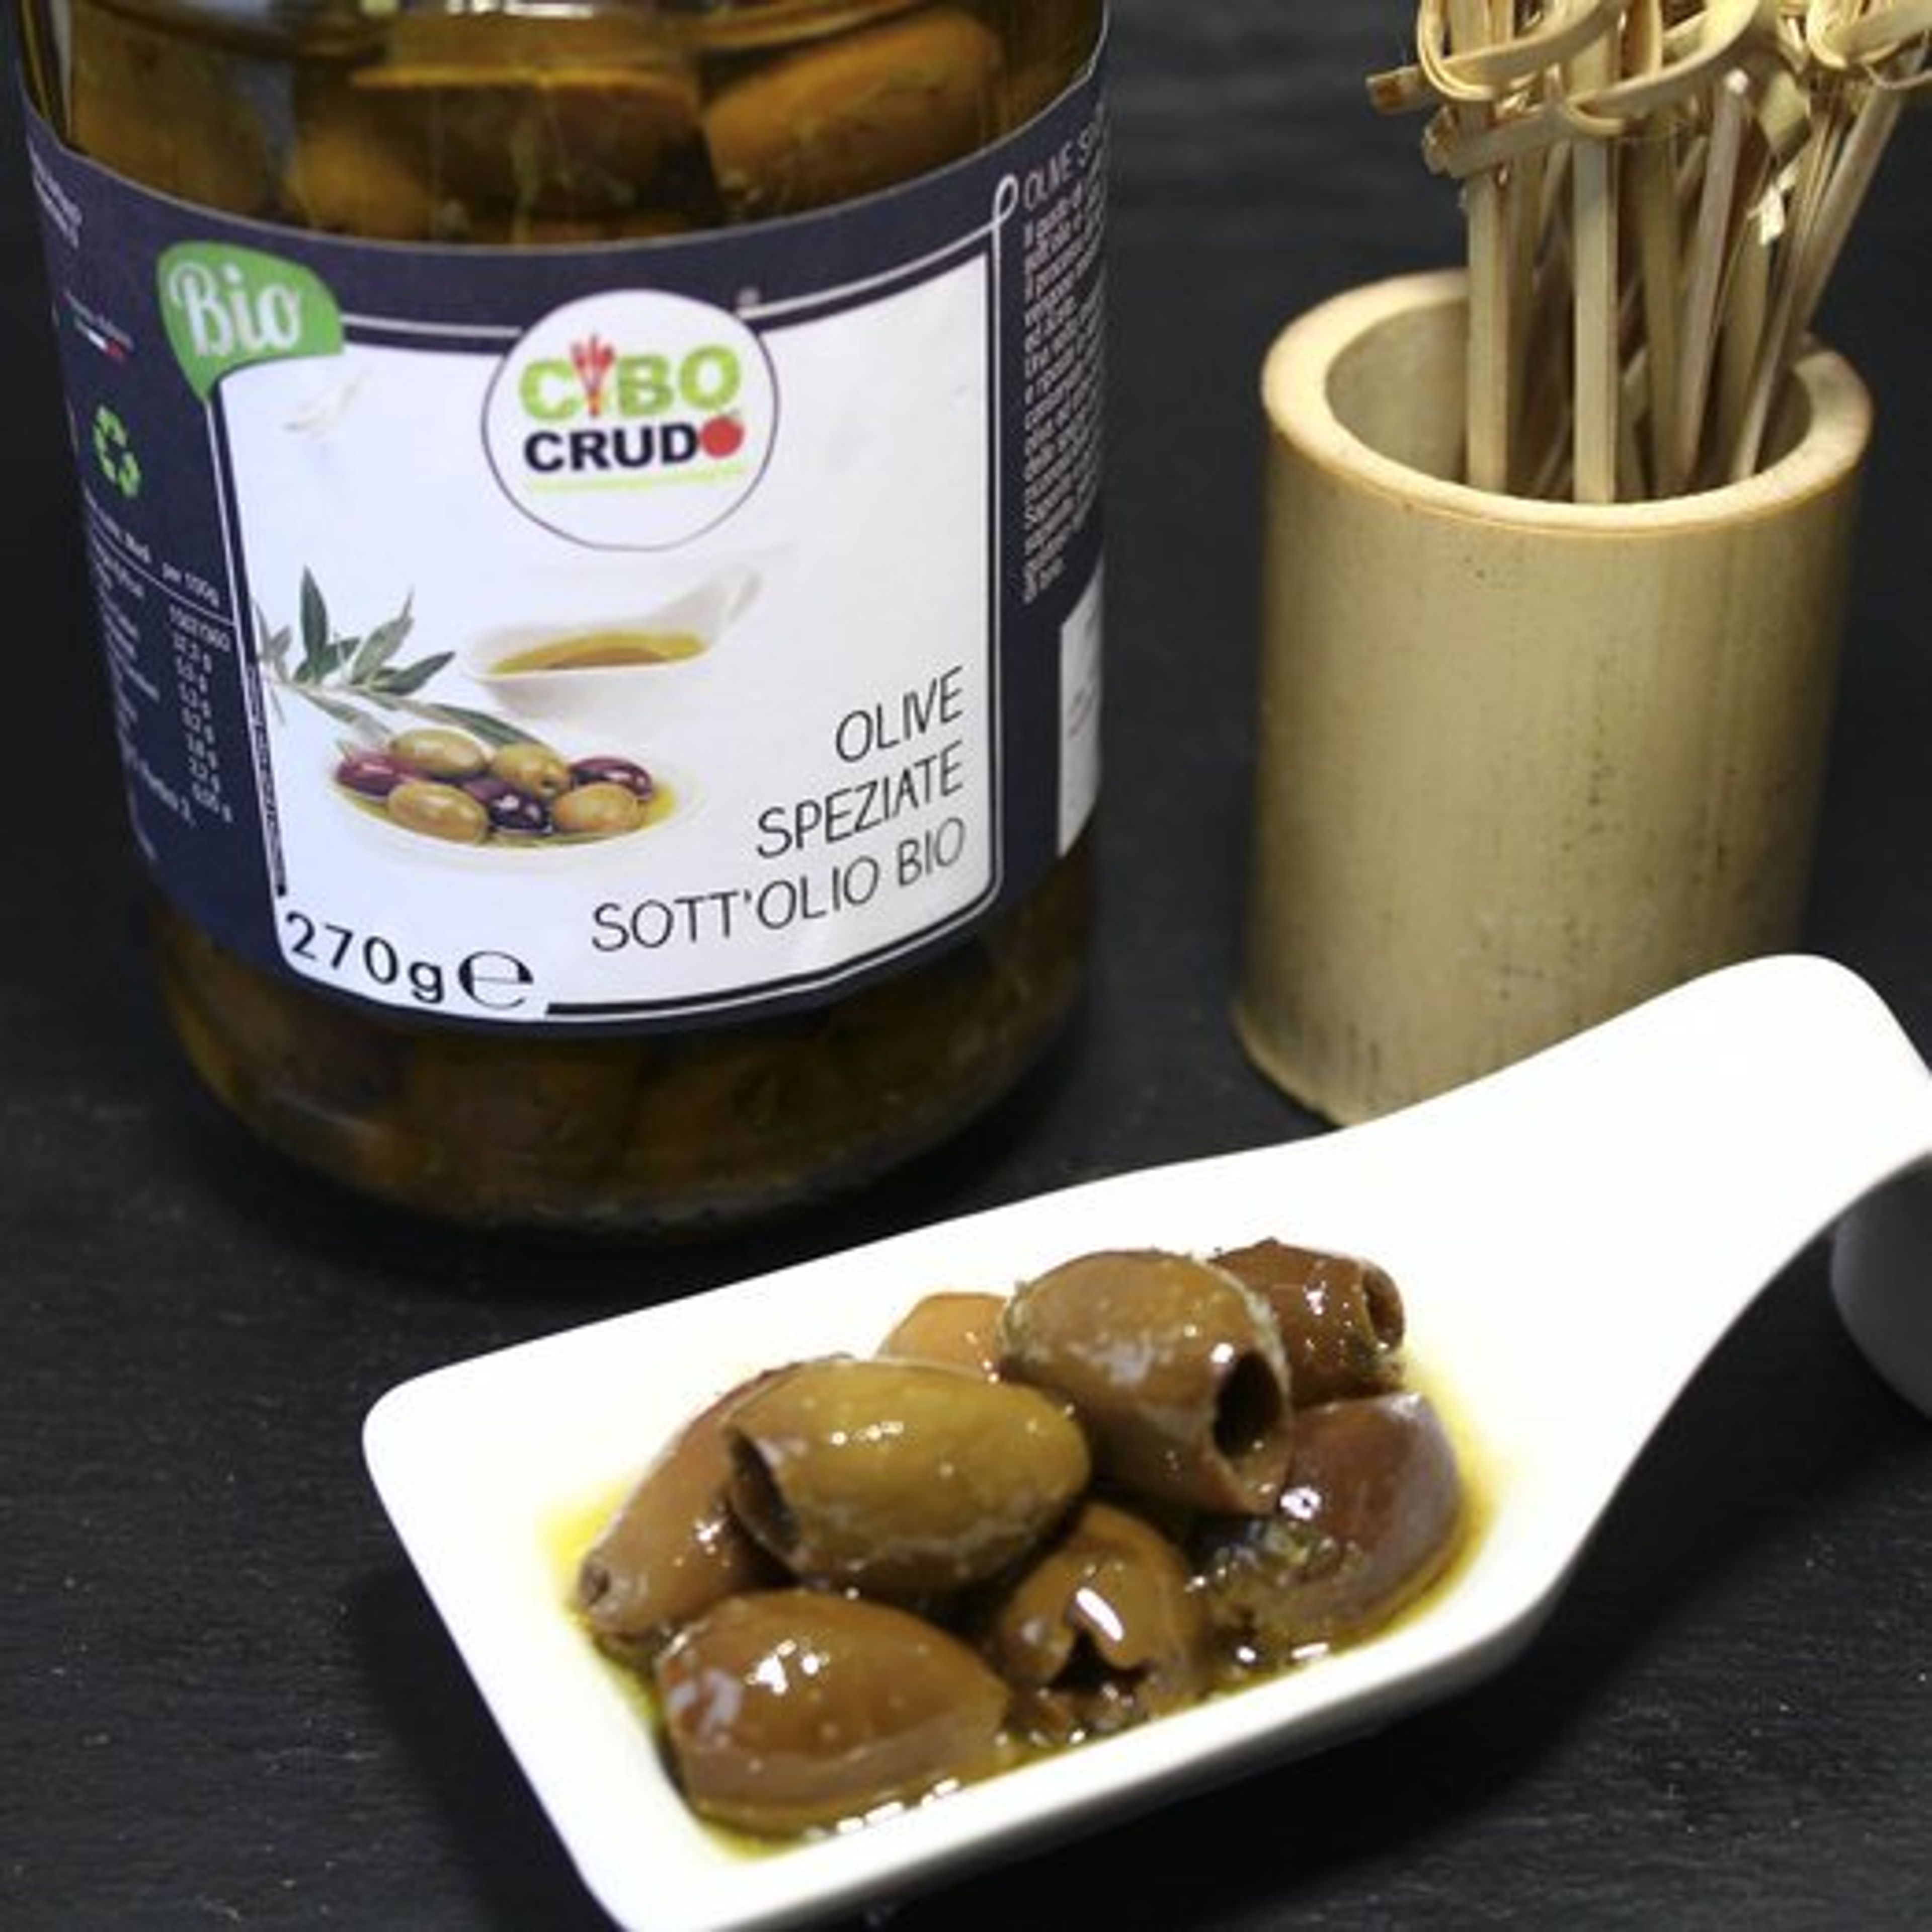 Olive Toscane Speziate Sott'olio Bio - 270g 1